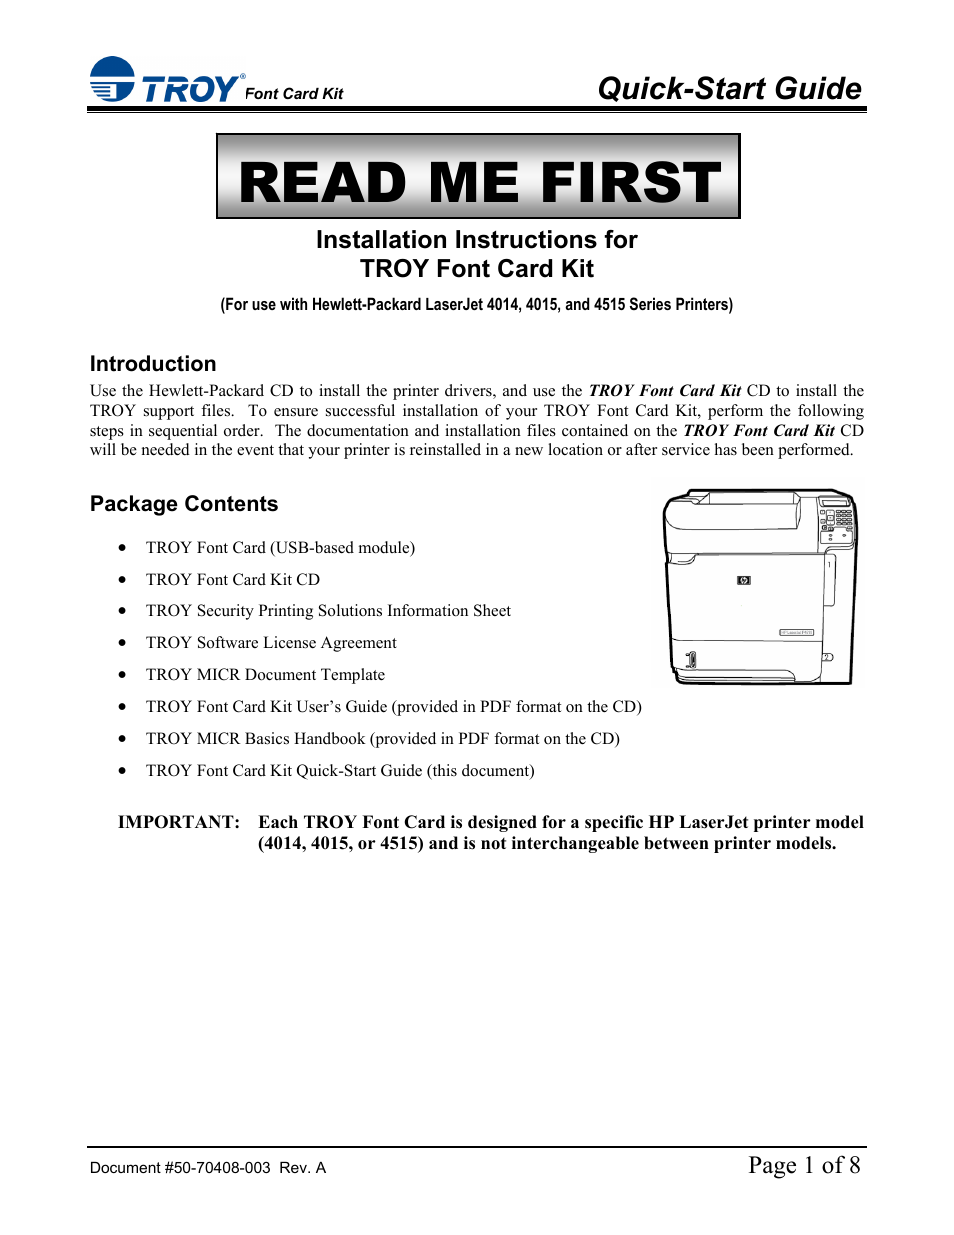 Hewlett-Packard LaserJet 4515 Font Card Kit Quick-Start Guide